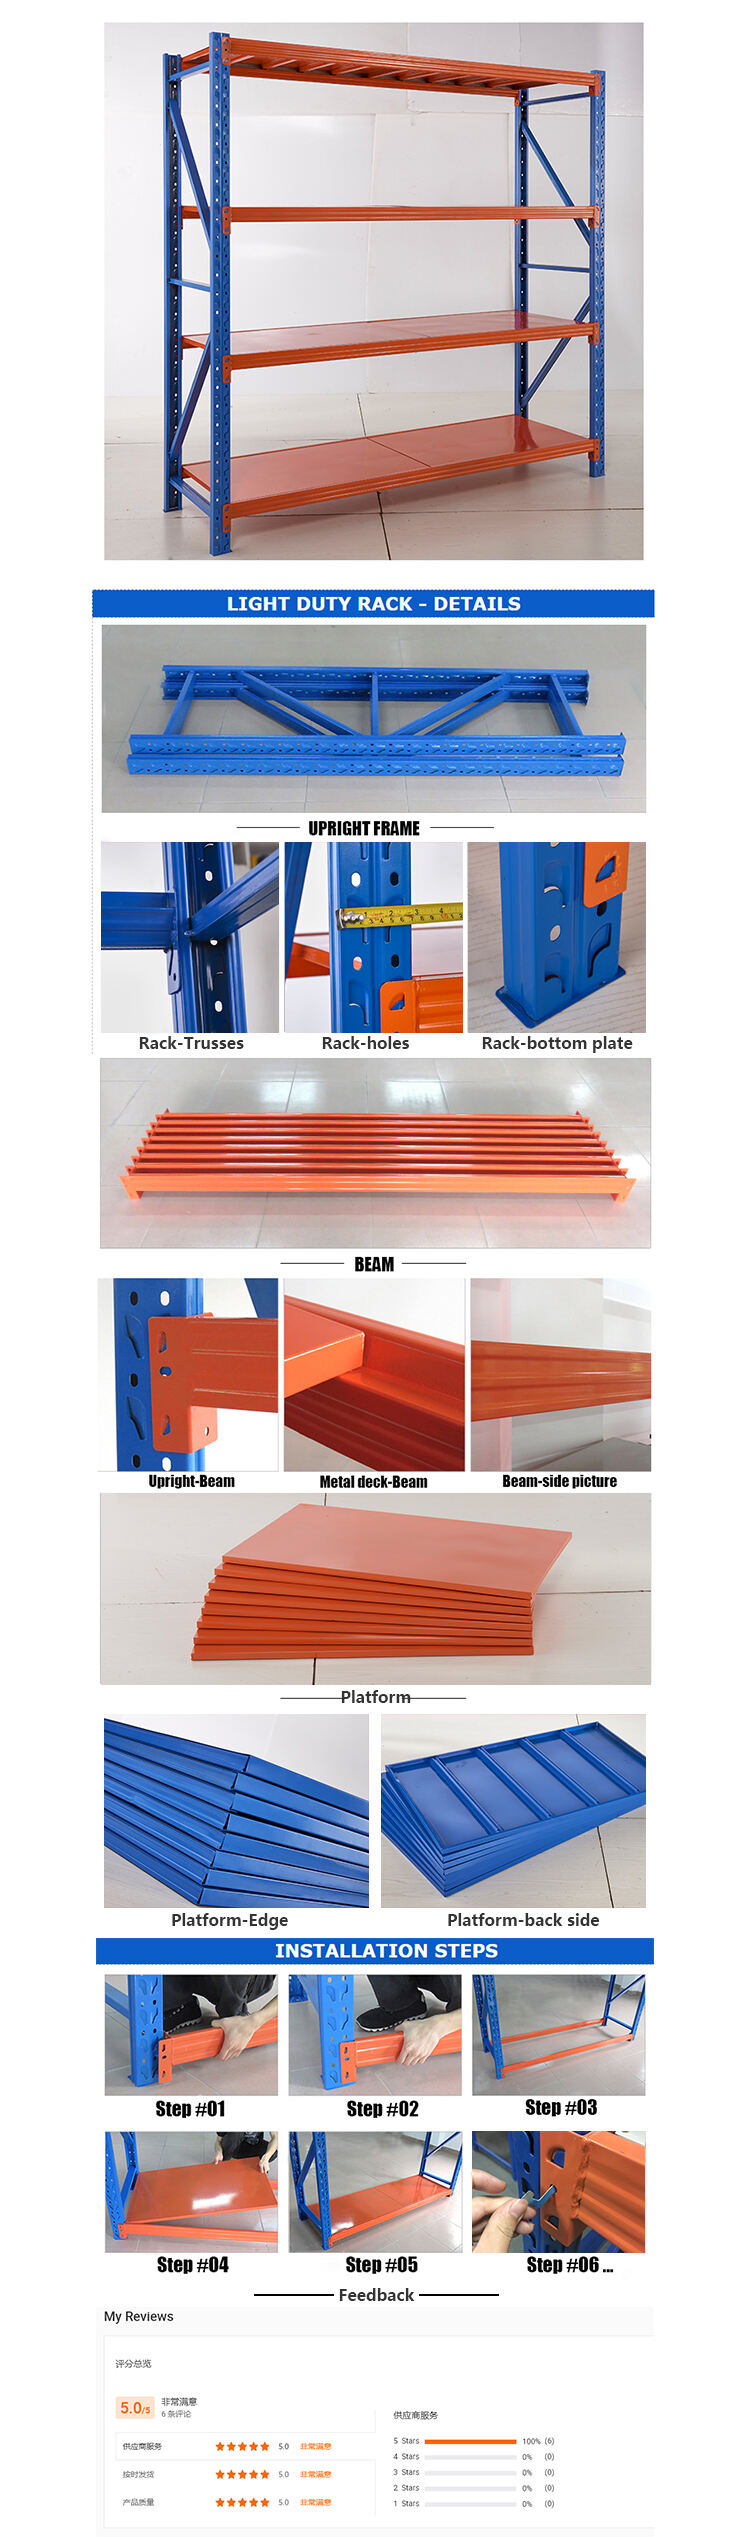 Storage equipment factory rack medium duty assembled iron shelves for goods steel racks for warehouse factory